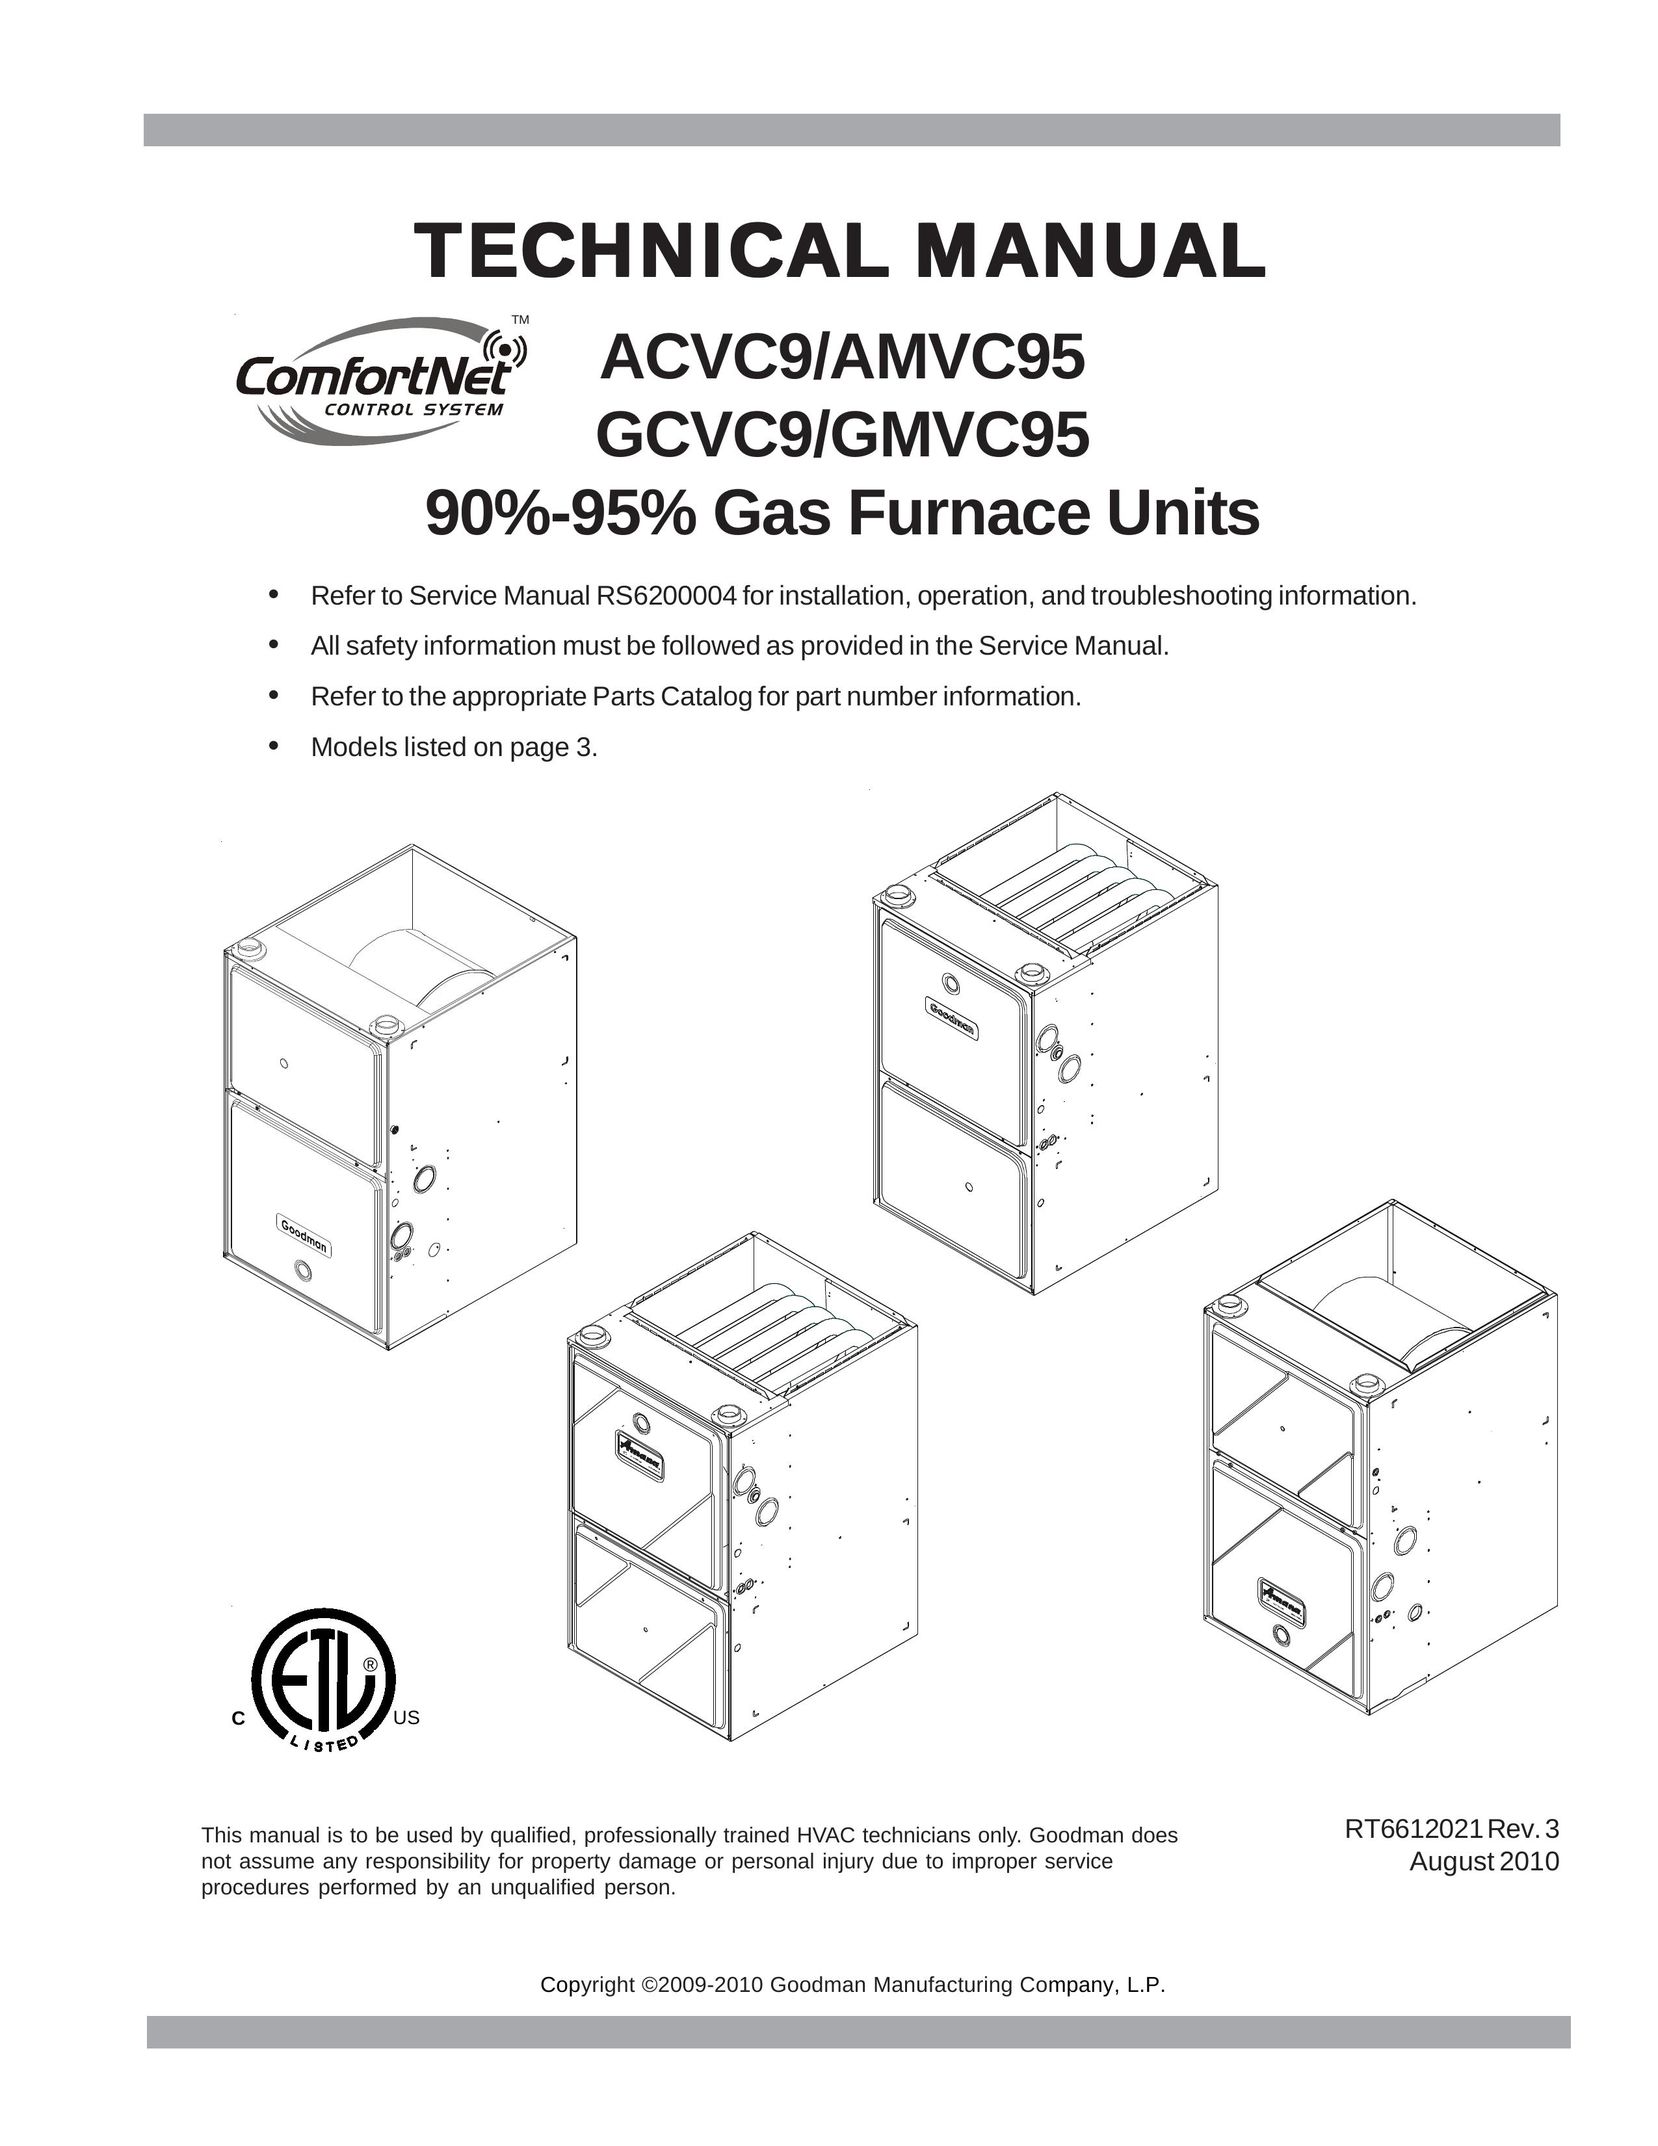 Goodman Mfg ACVC9/AMVC95 Furnace User Manual